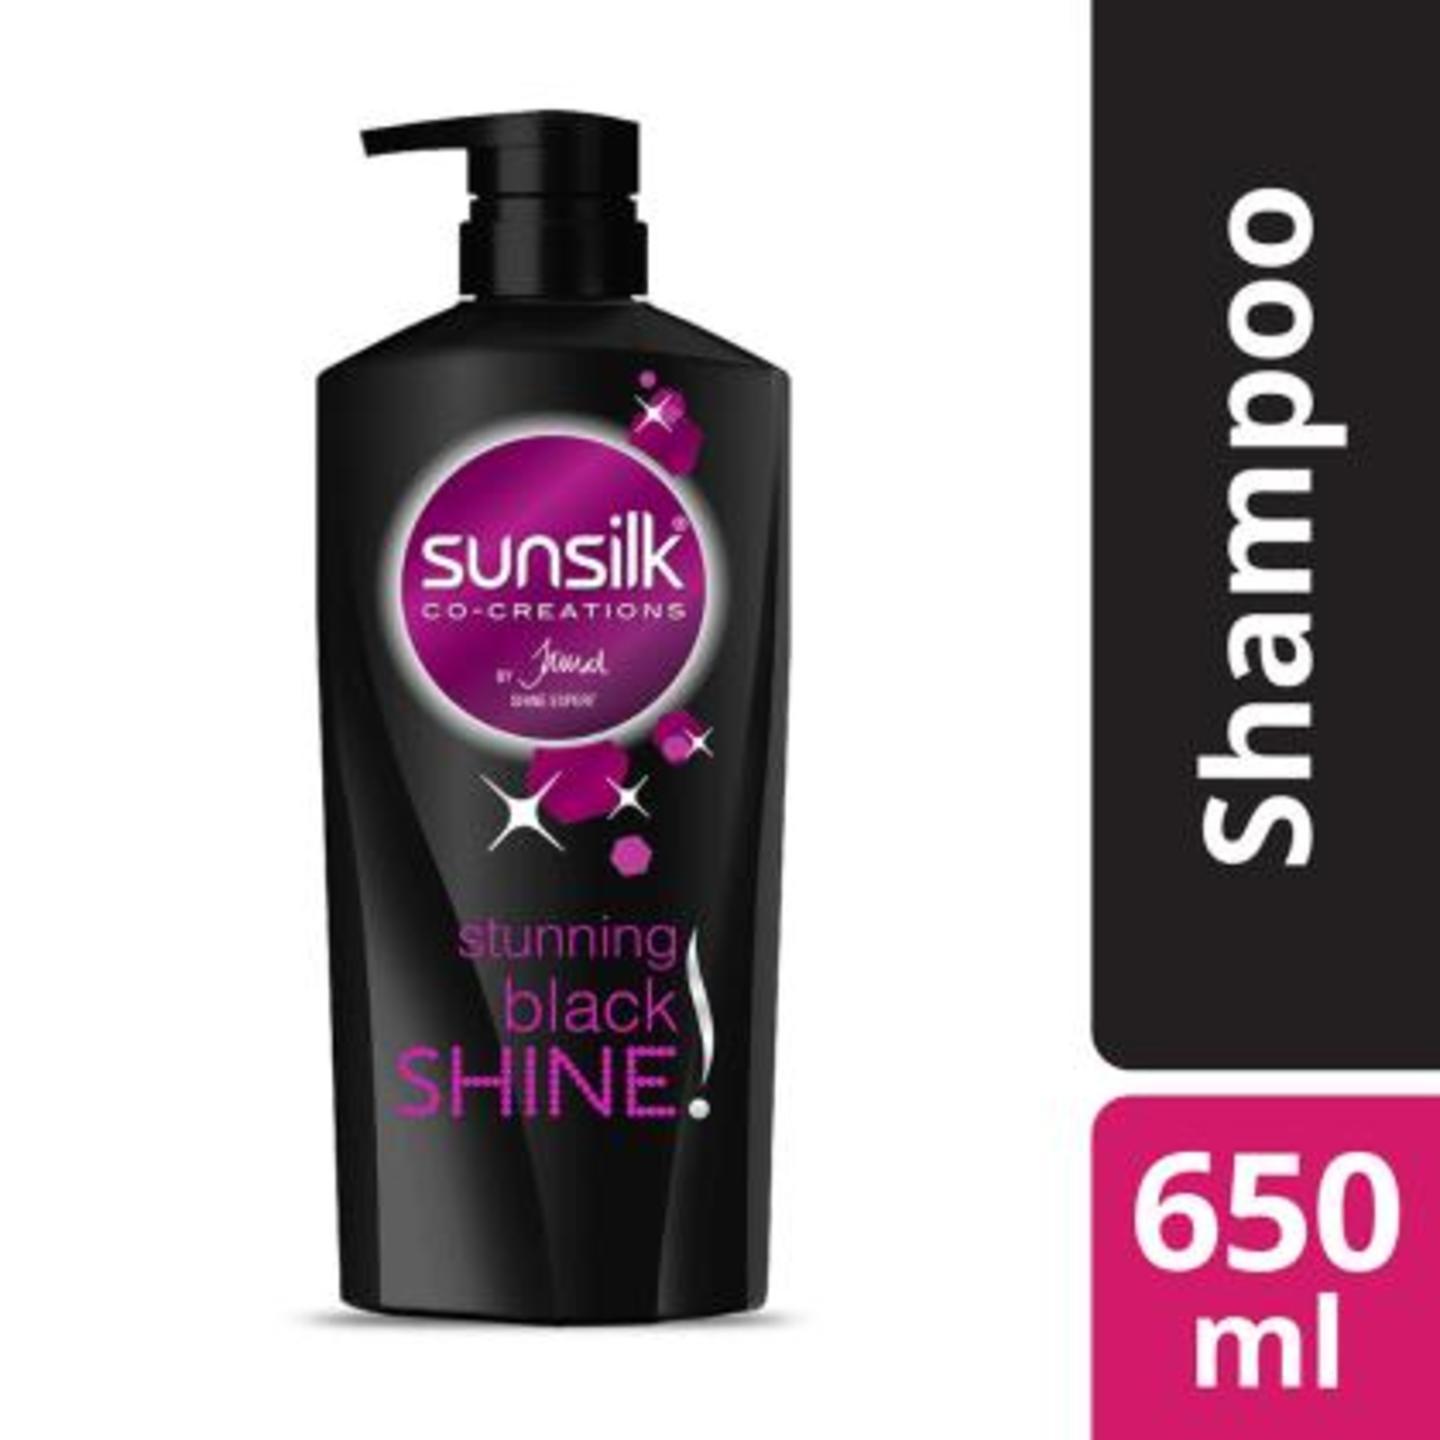 Sunsilk Co-Creations Stunning Black Shine Shampoo 650 ml